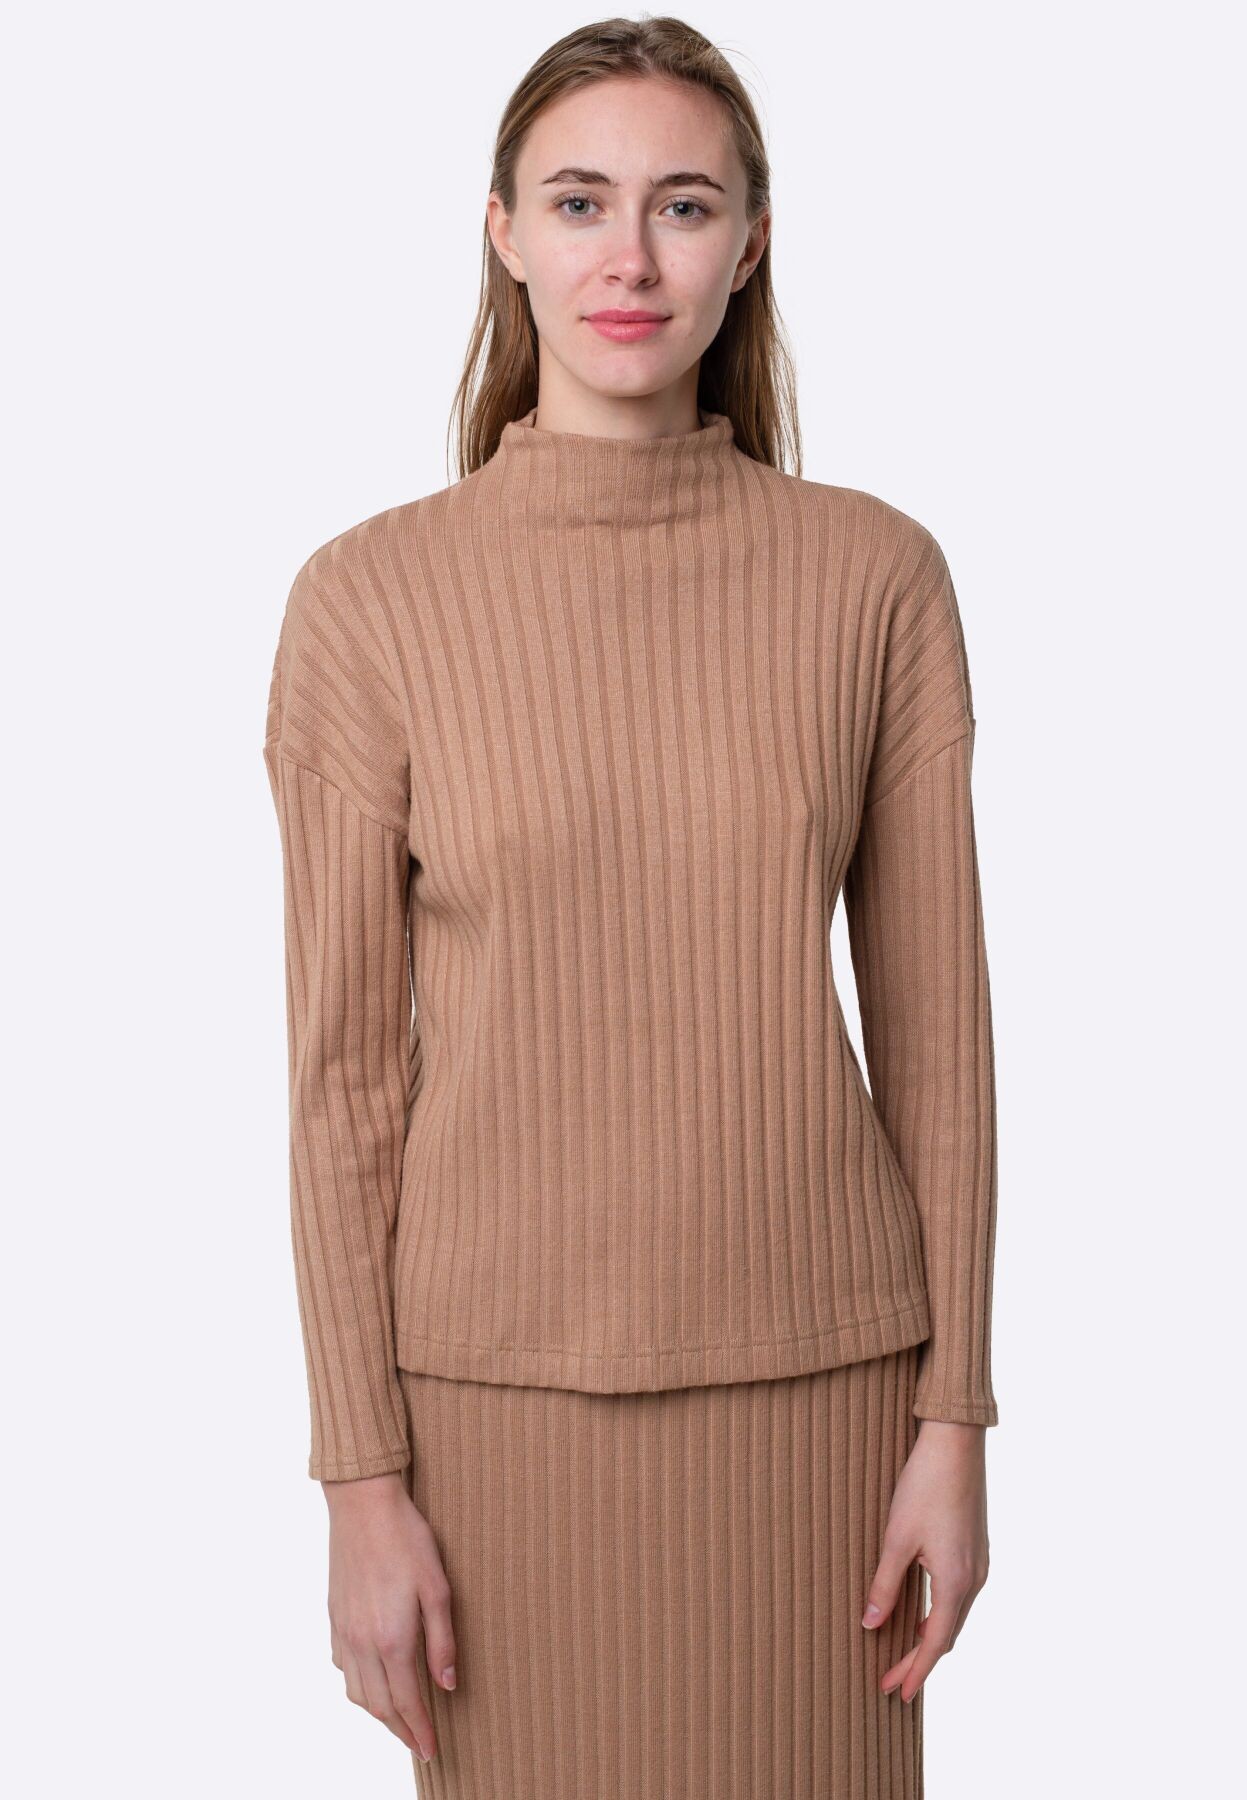 Beige knitted jumper 1283c